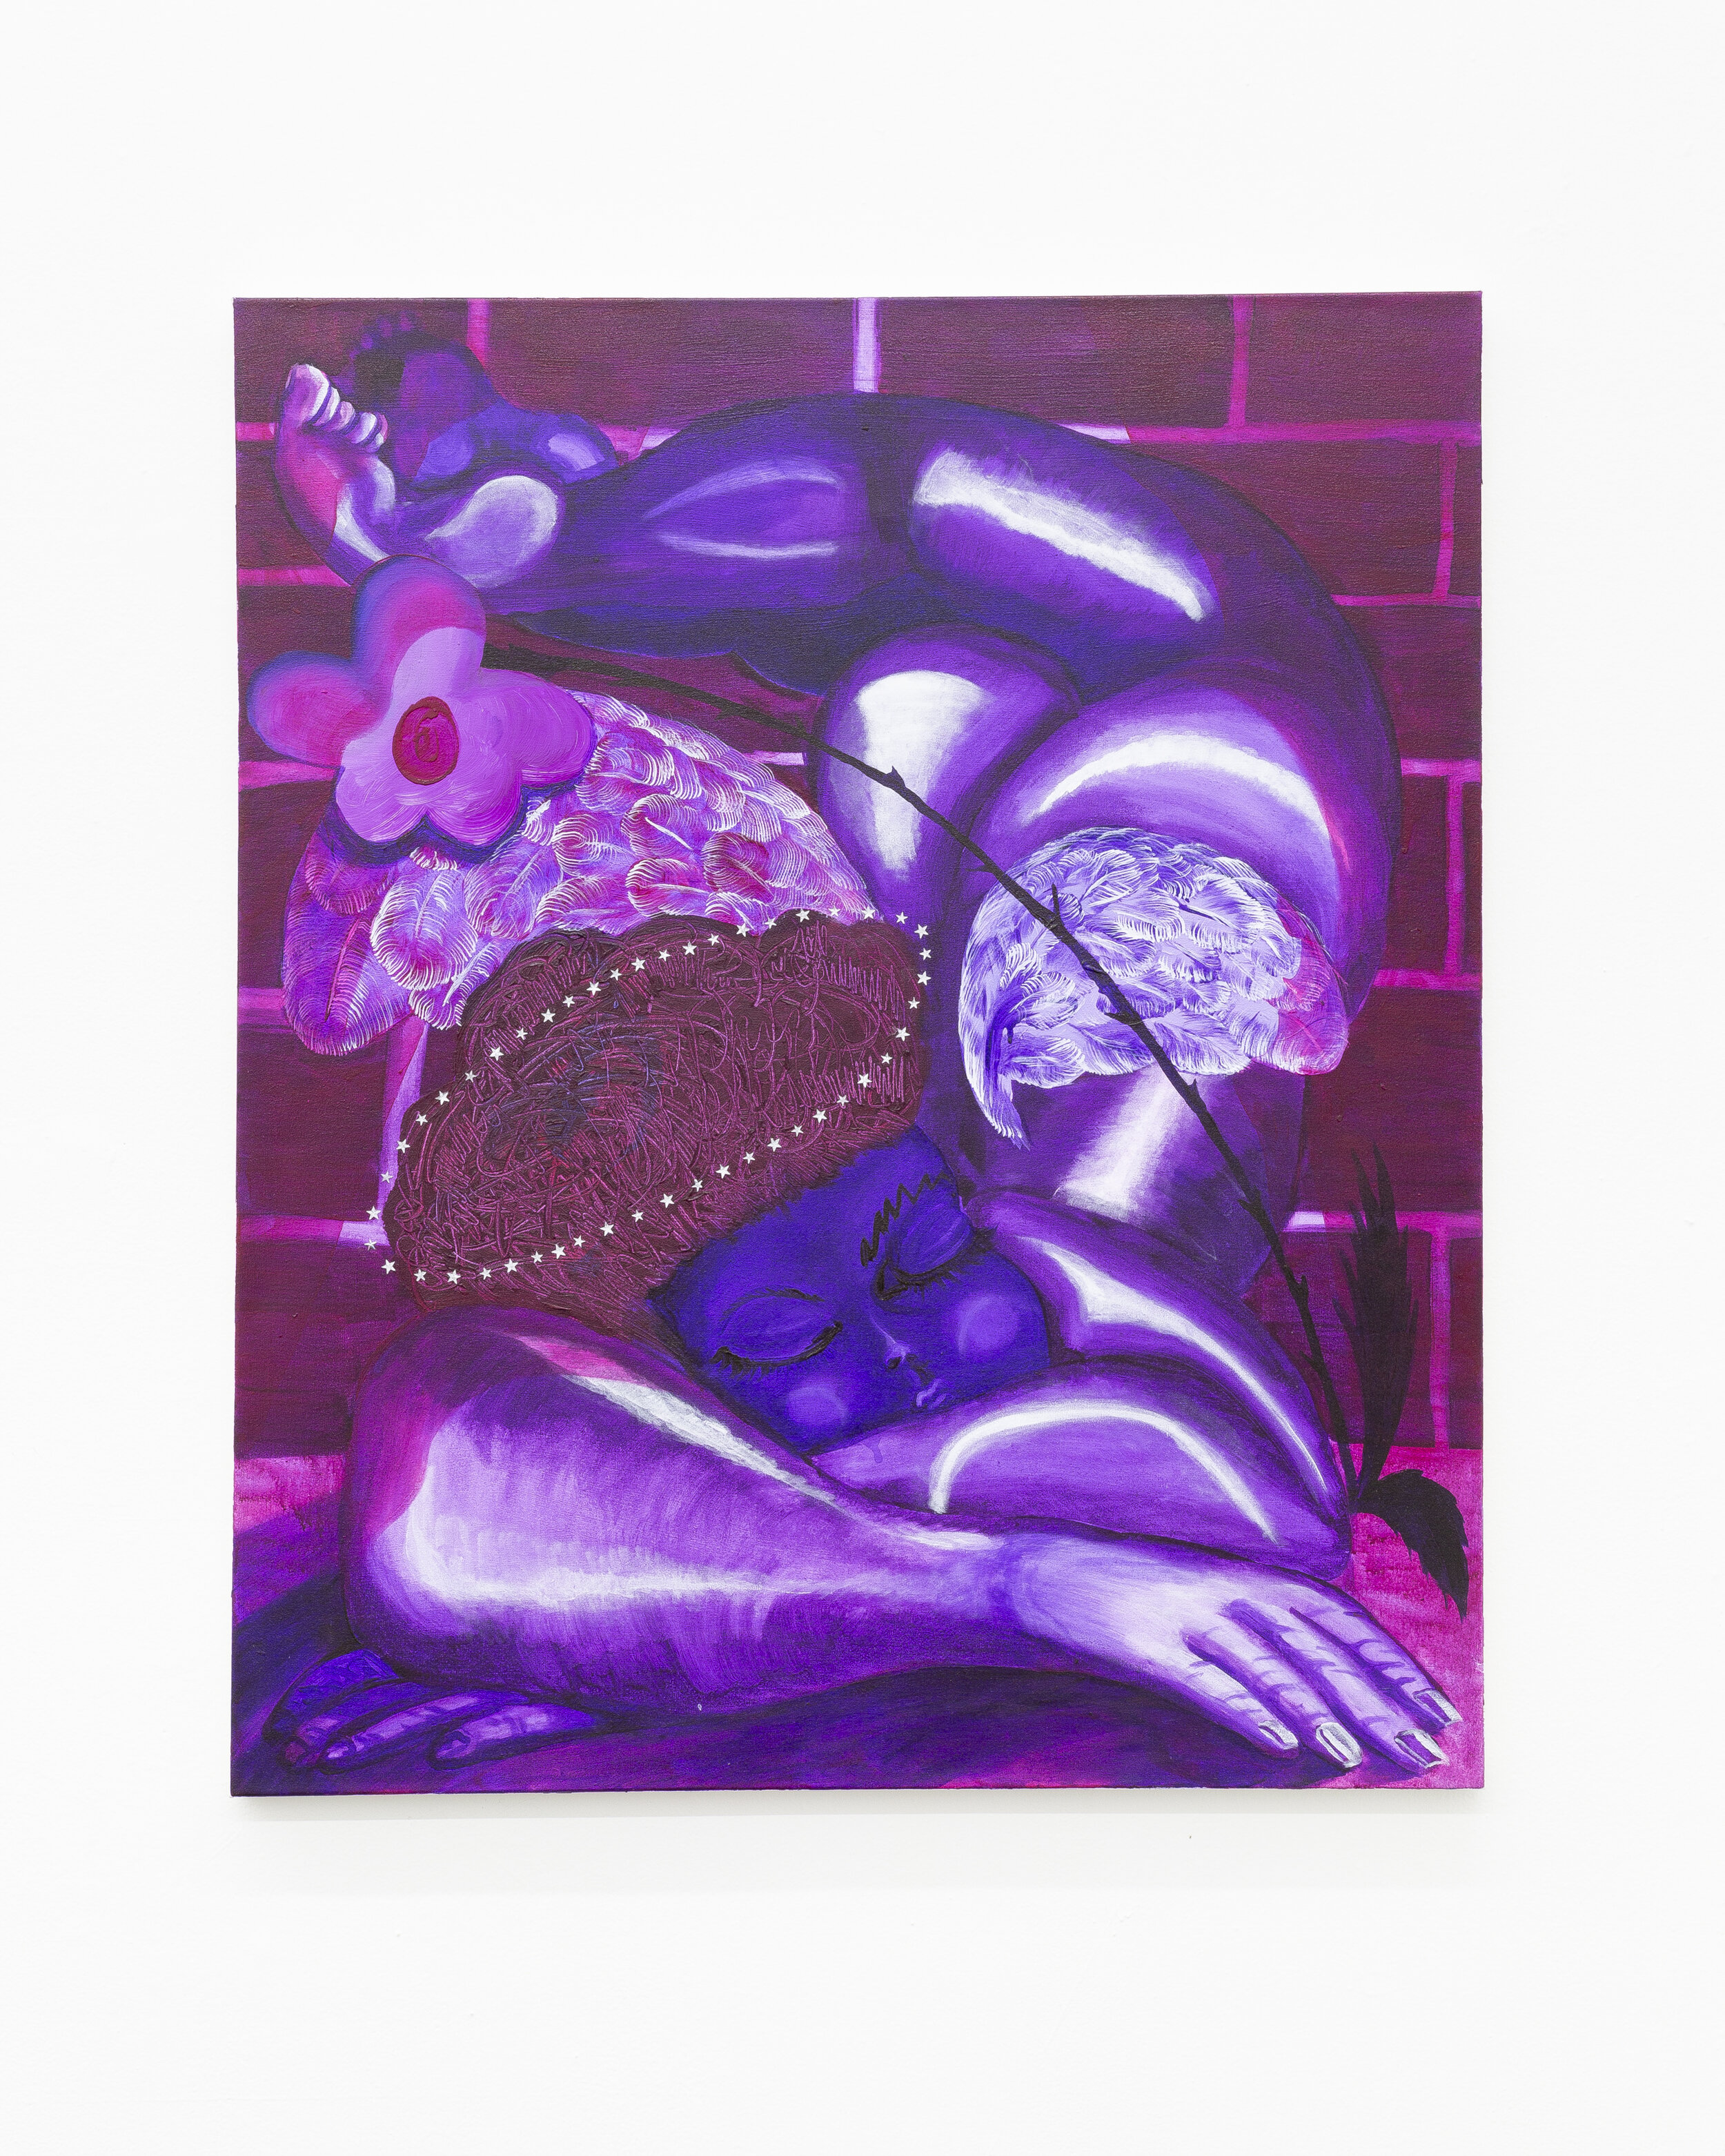 Juan Arango Palacios, Angelito Dormidito, 40 x 48 Inches,  Acrylic and rhinestones on canvas, 2021